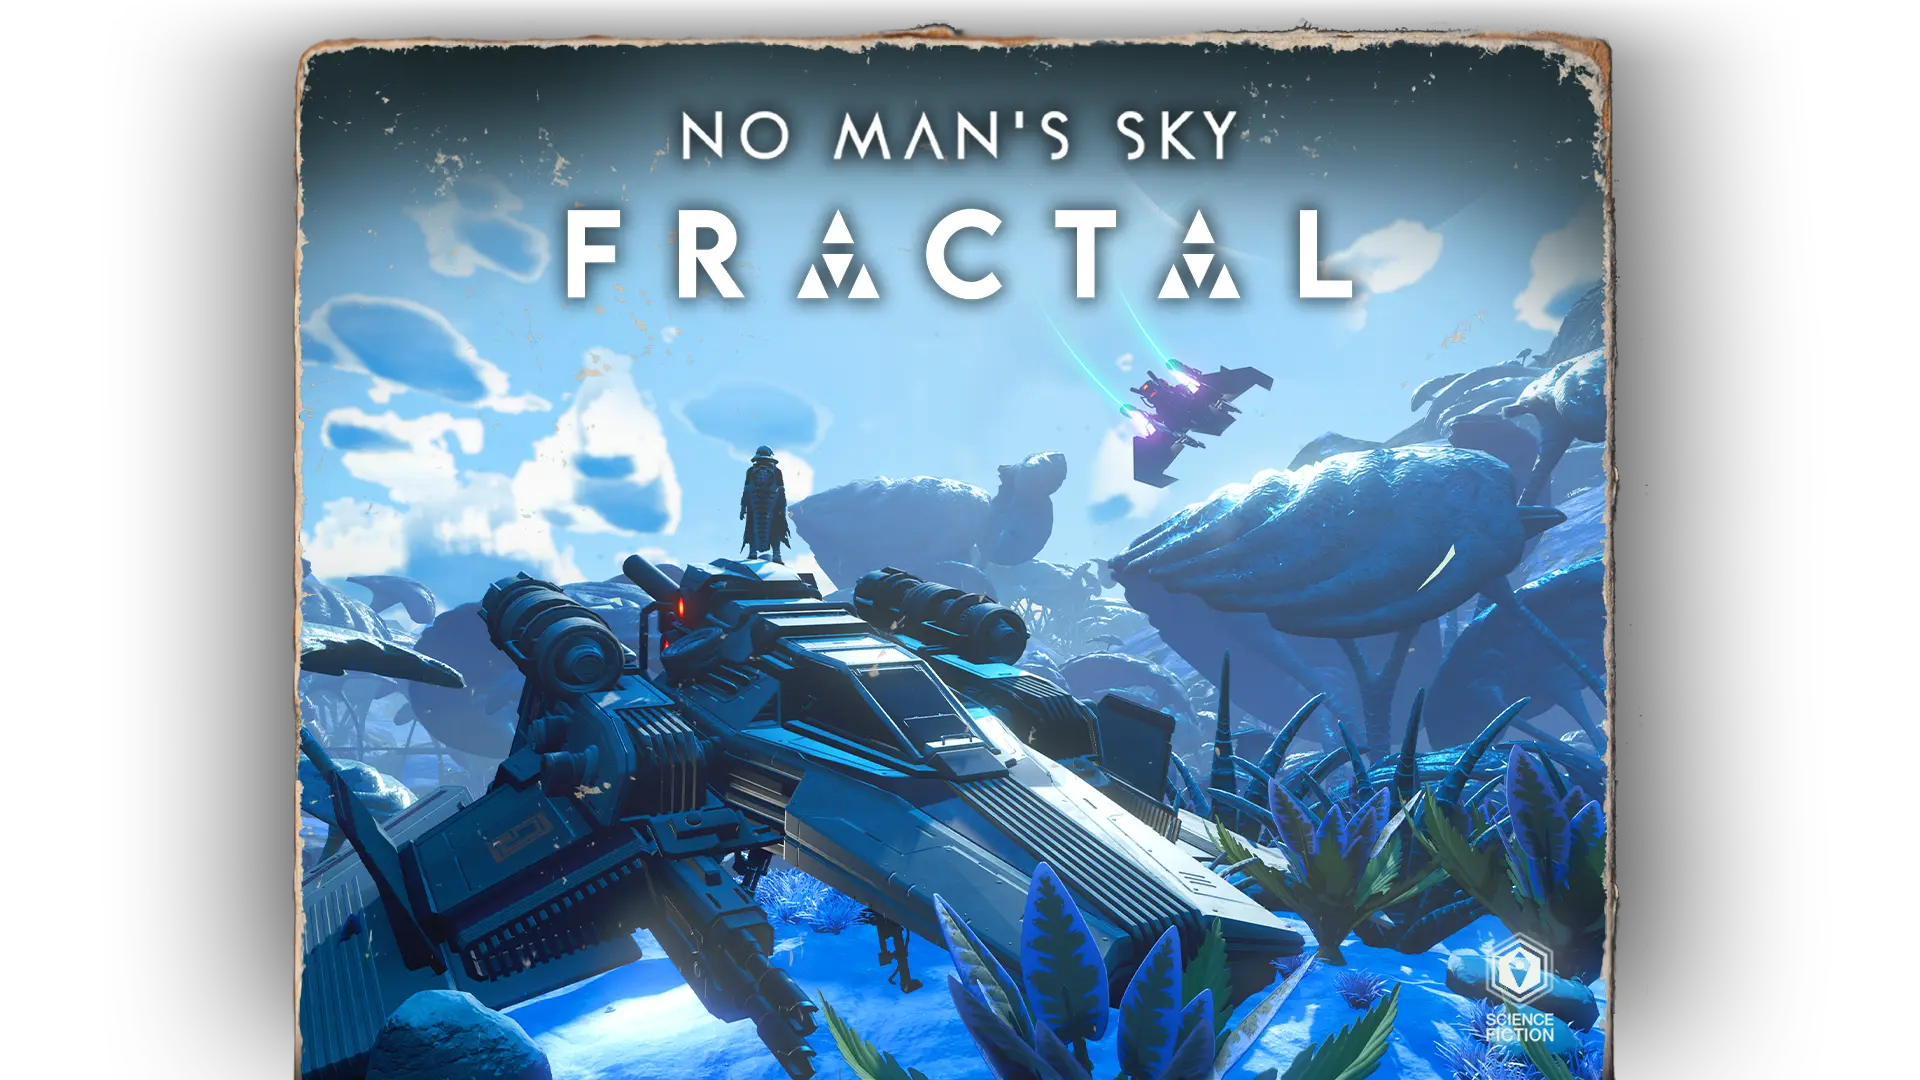 NO MAN'S SKY Fractal